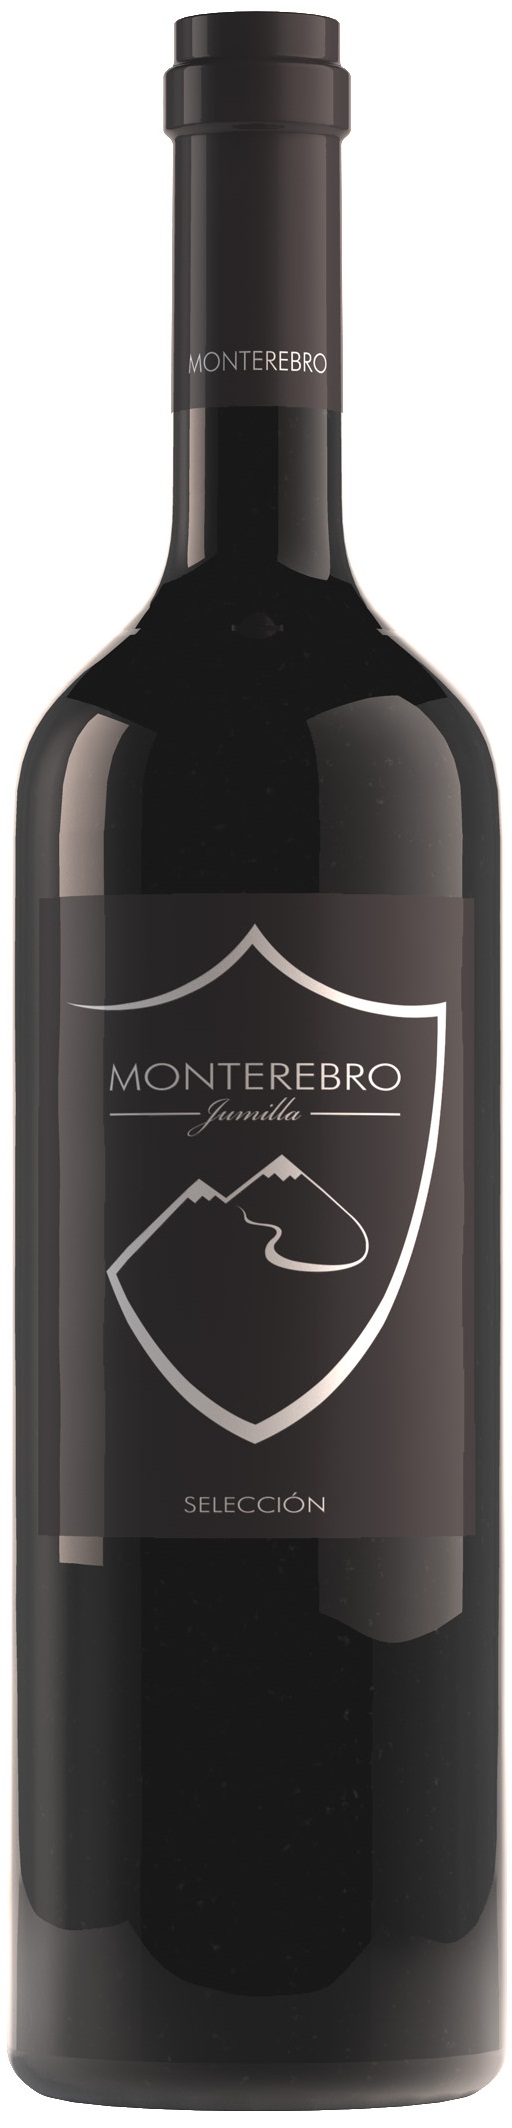 Logo del vino Monterebro Selección